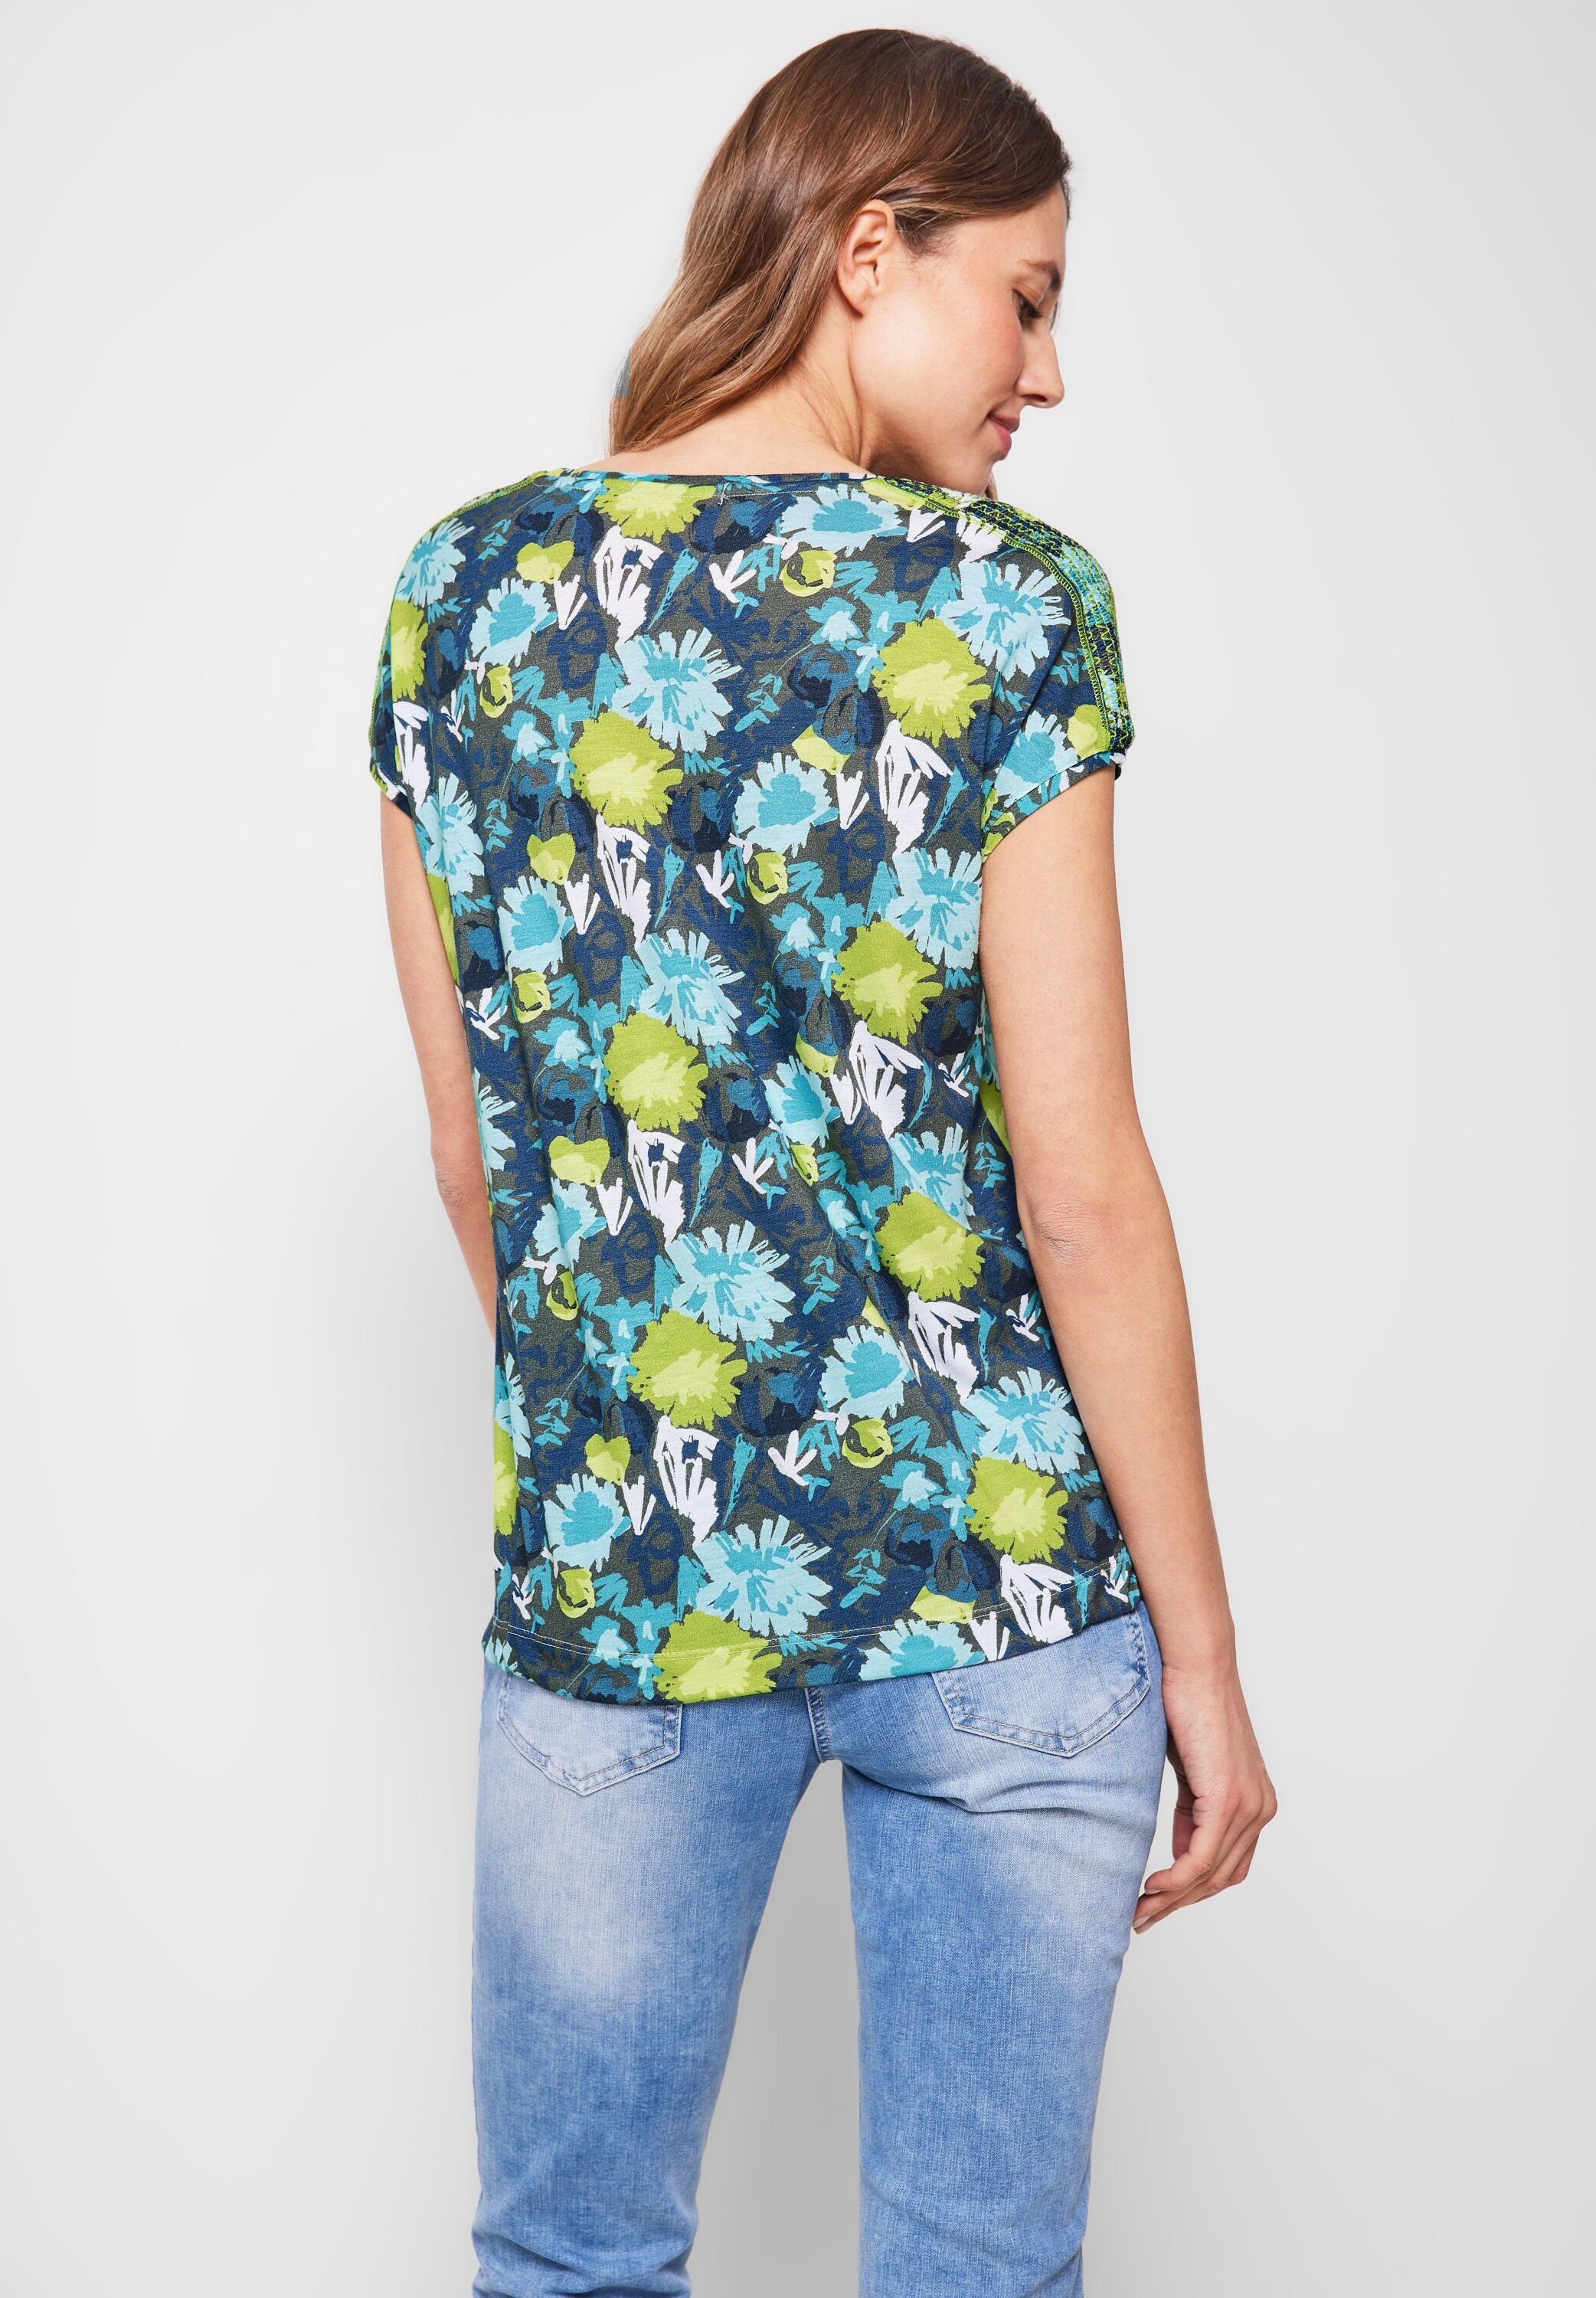 T-Shirt allover Blumenprint khaki mit Cecil easy